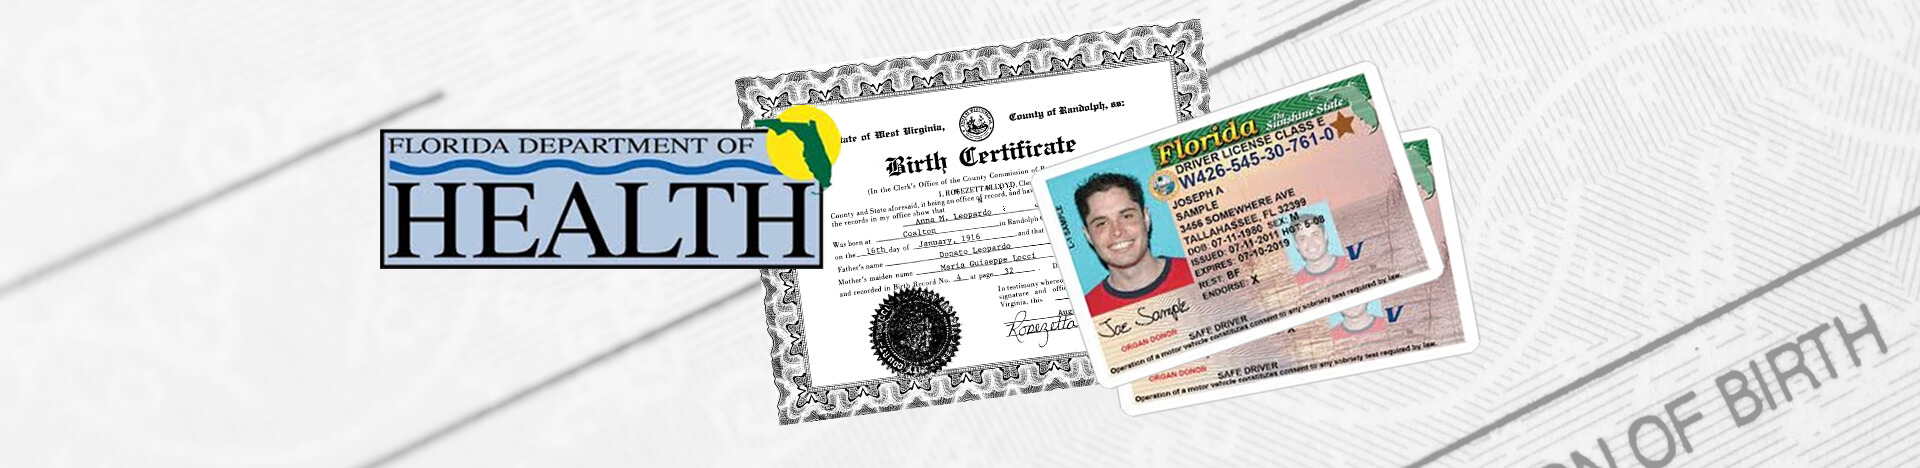 banner-birth-certificate